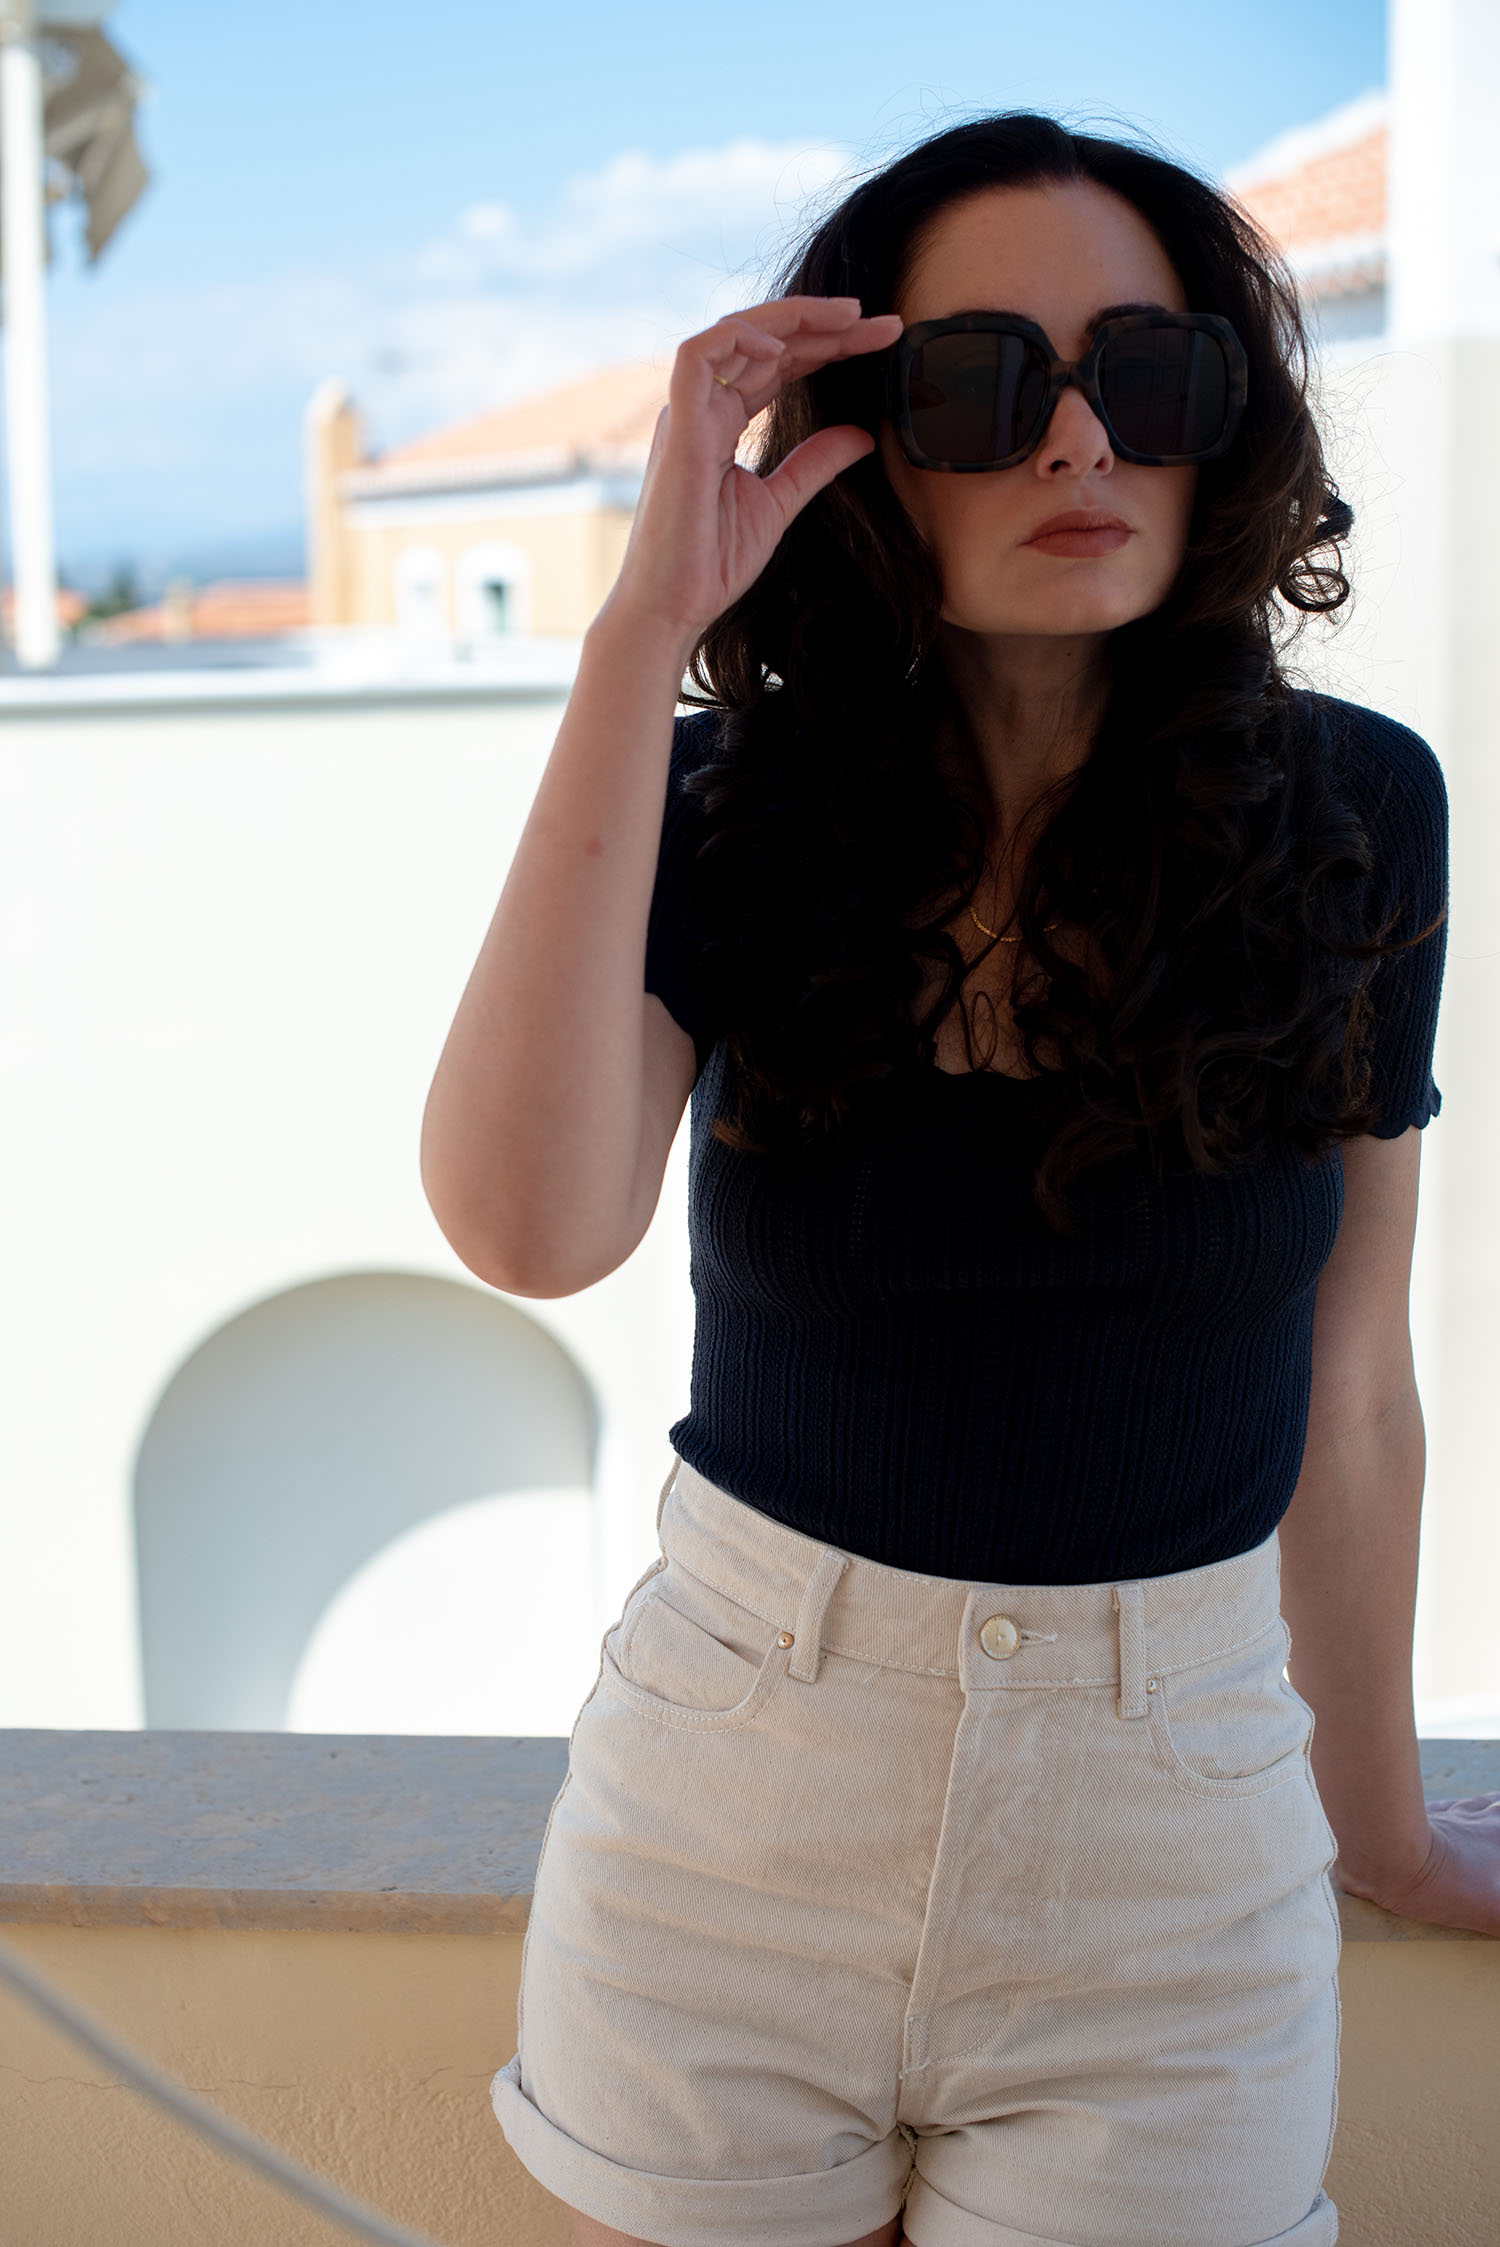 Coco & Vera - Mango sunglasses, Sezane knit top, Zara shorts